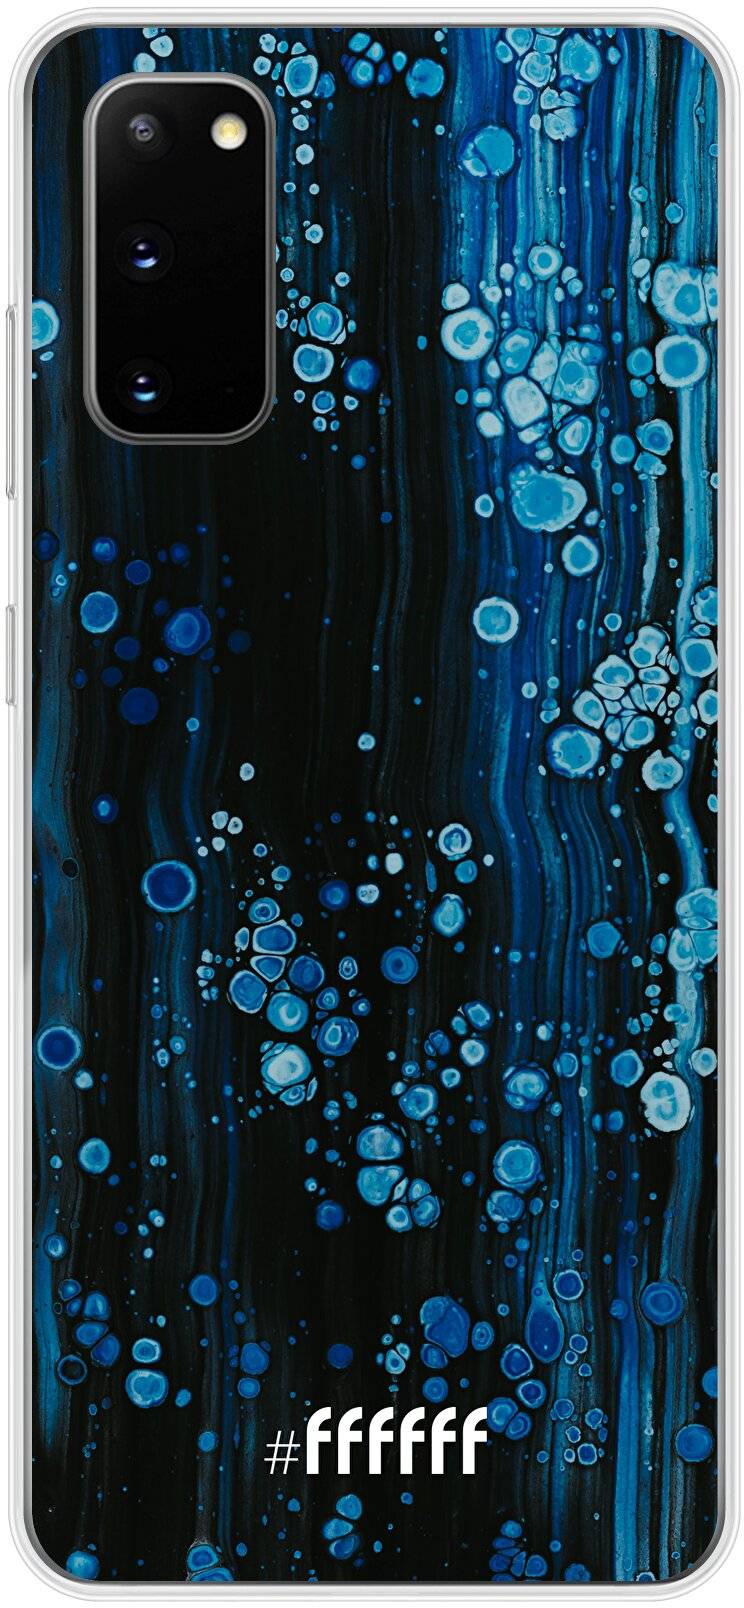 Bubbling Blues Galaxy S20